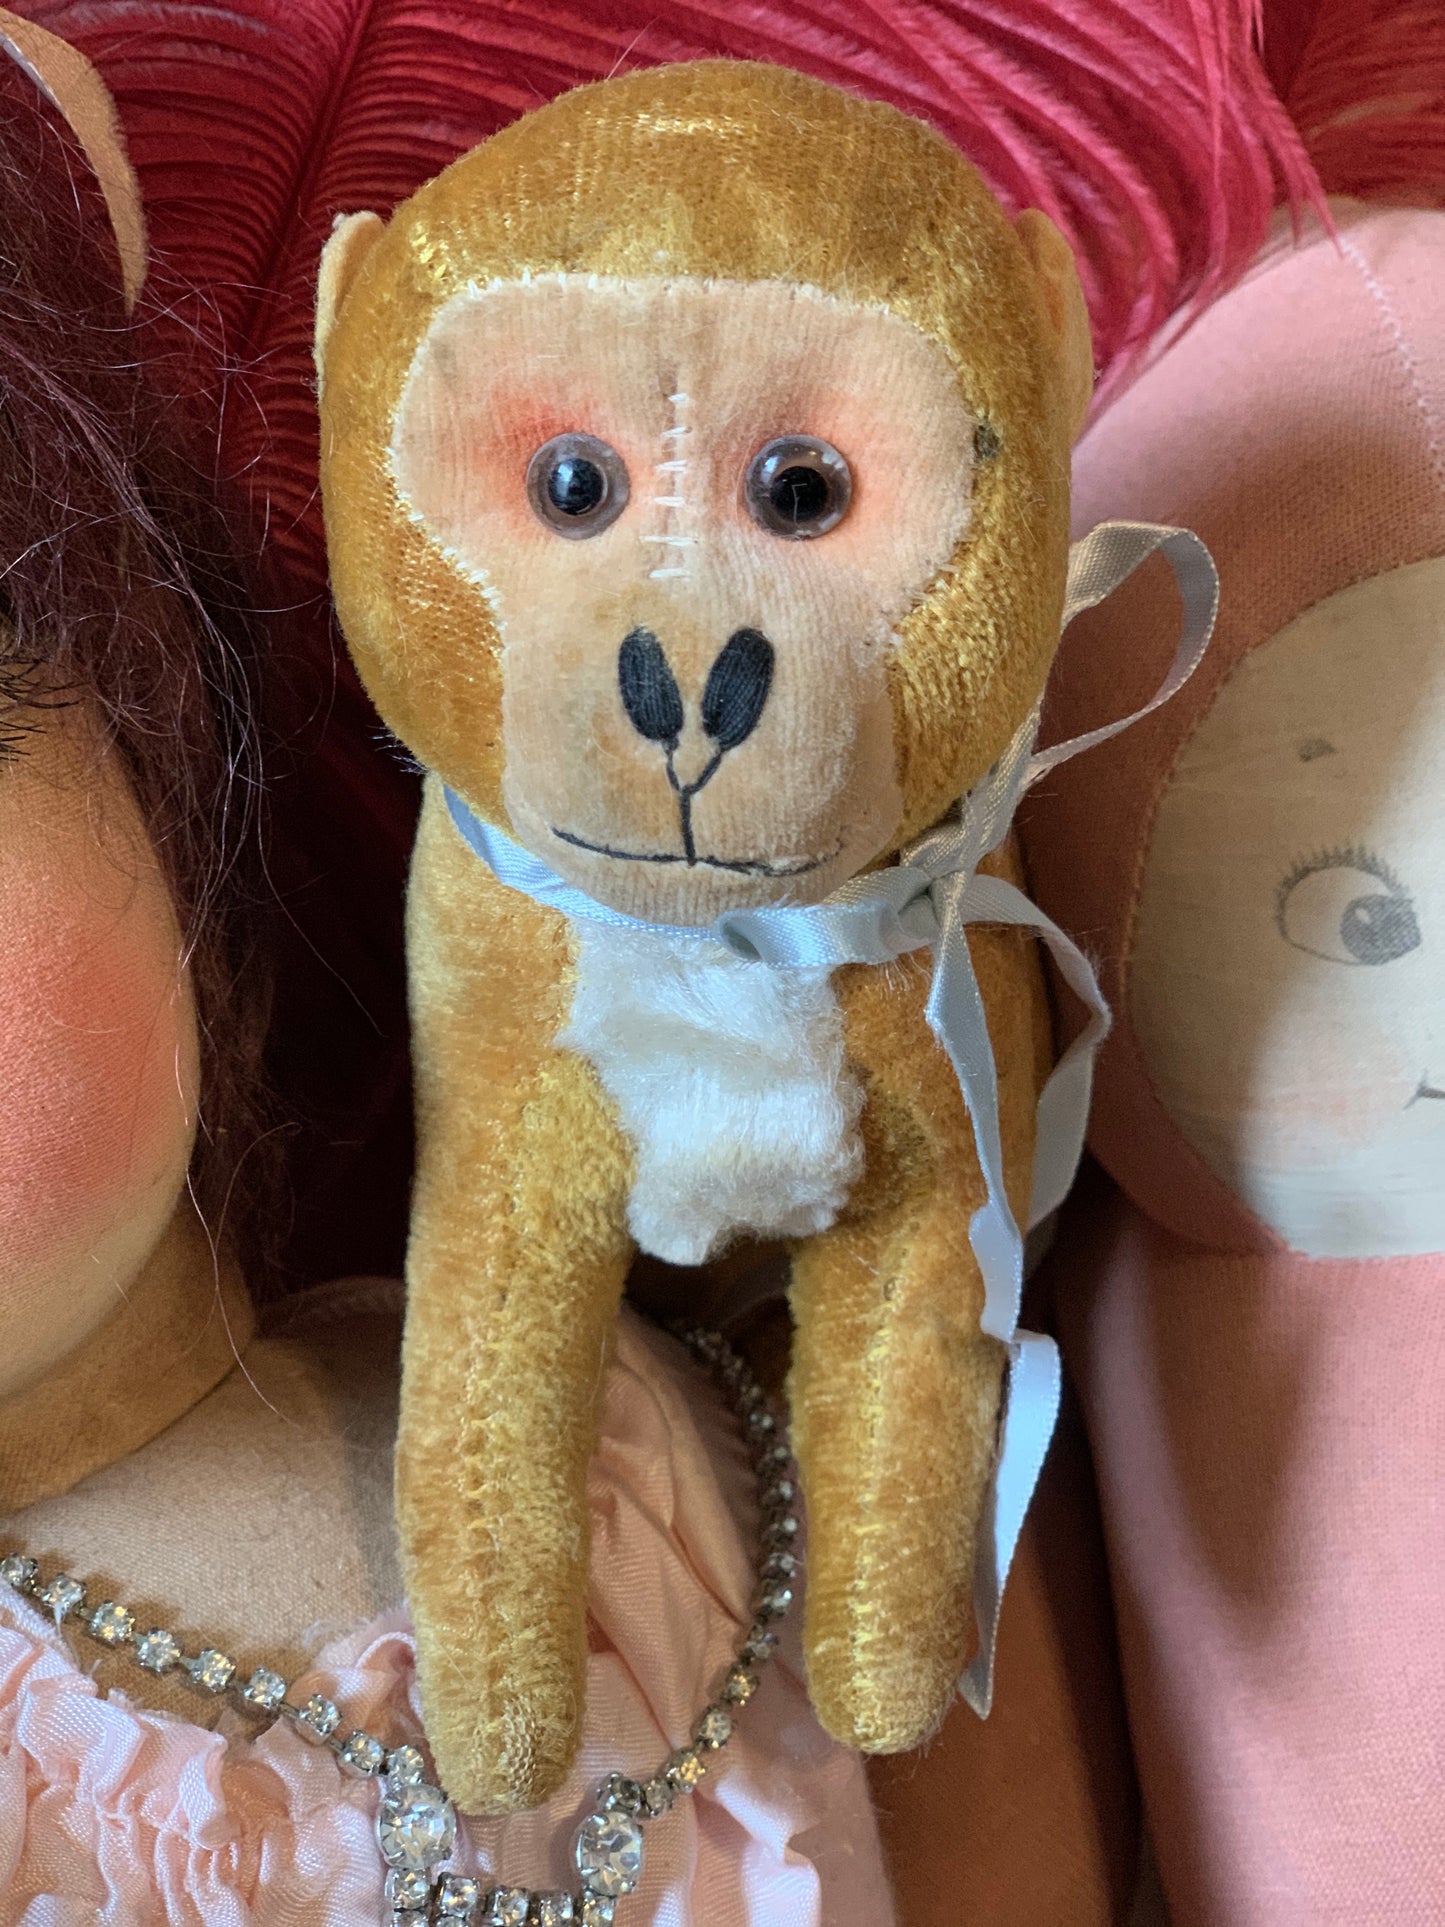 Vintage glass eye straw stuffed old Japan toy monkey